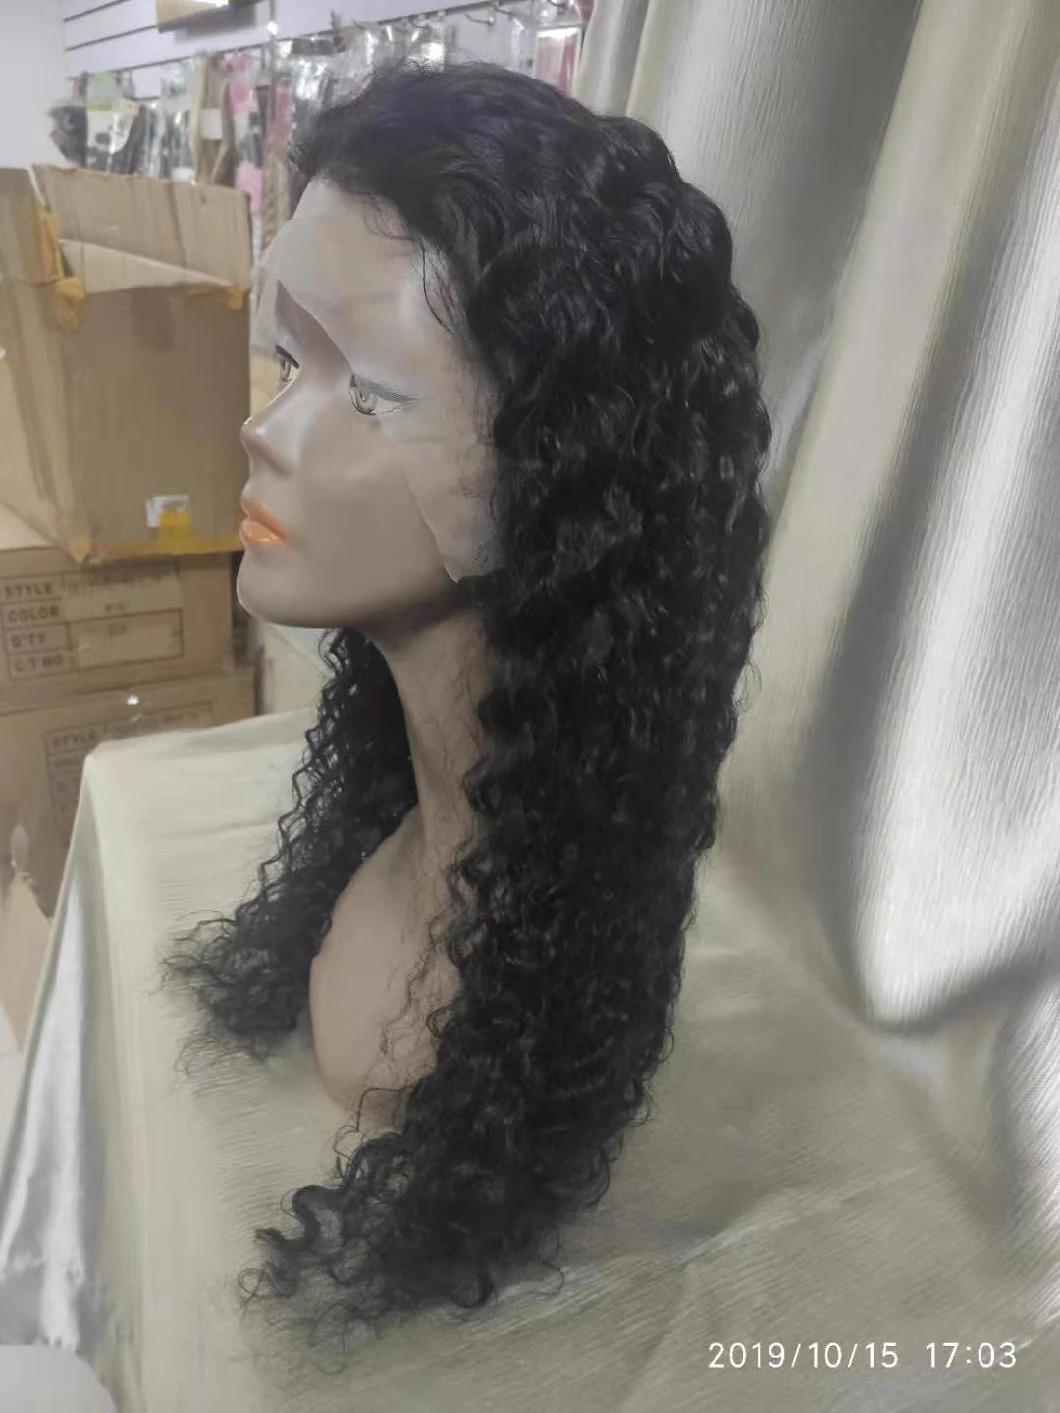 Raw Virgin Indian Human Hair Lace Wig